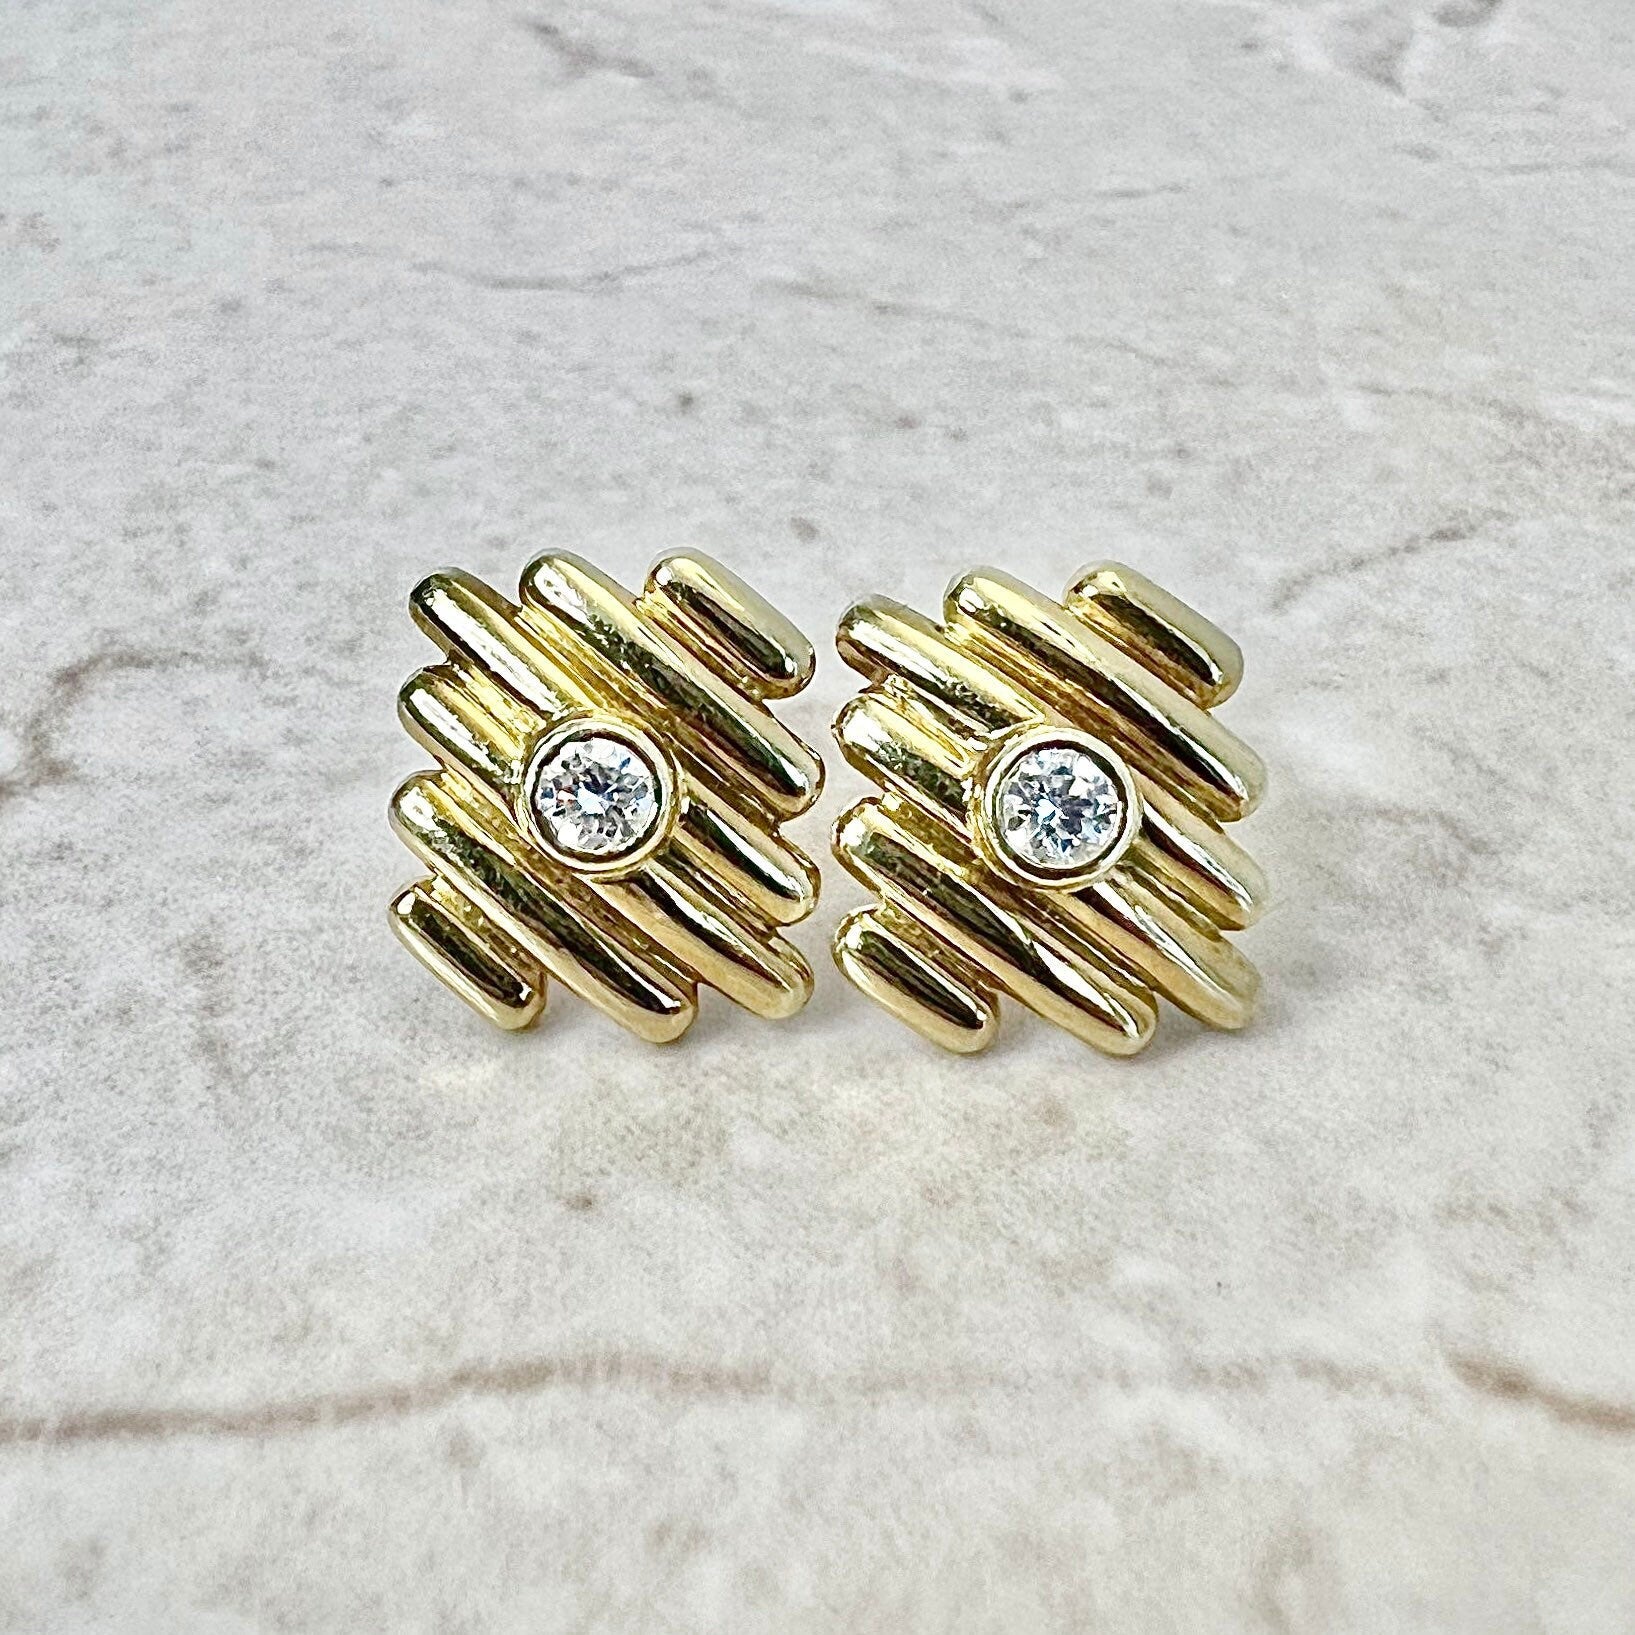 Vintage 18K Gold Diamond Stud Earrings - Yellow Gold Studs - Diamond Earrings - Birthday Gift - Best Gift For Her